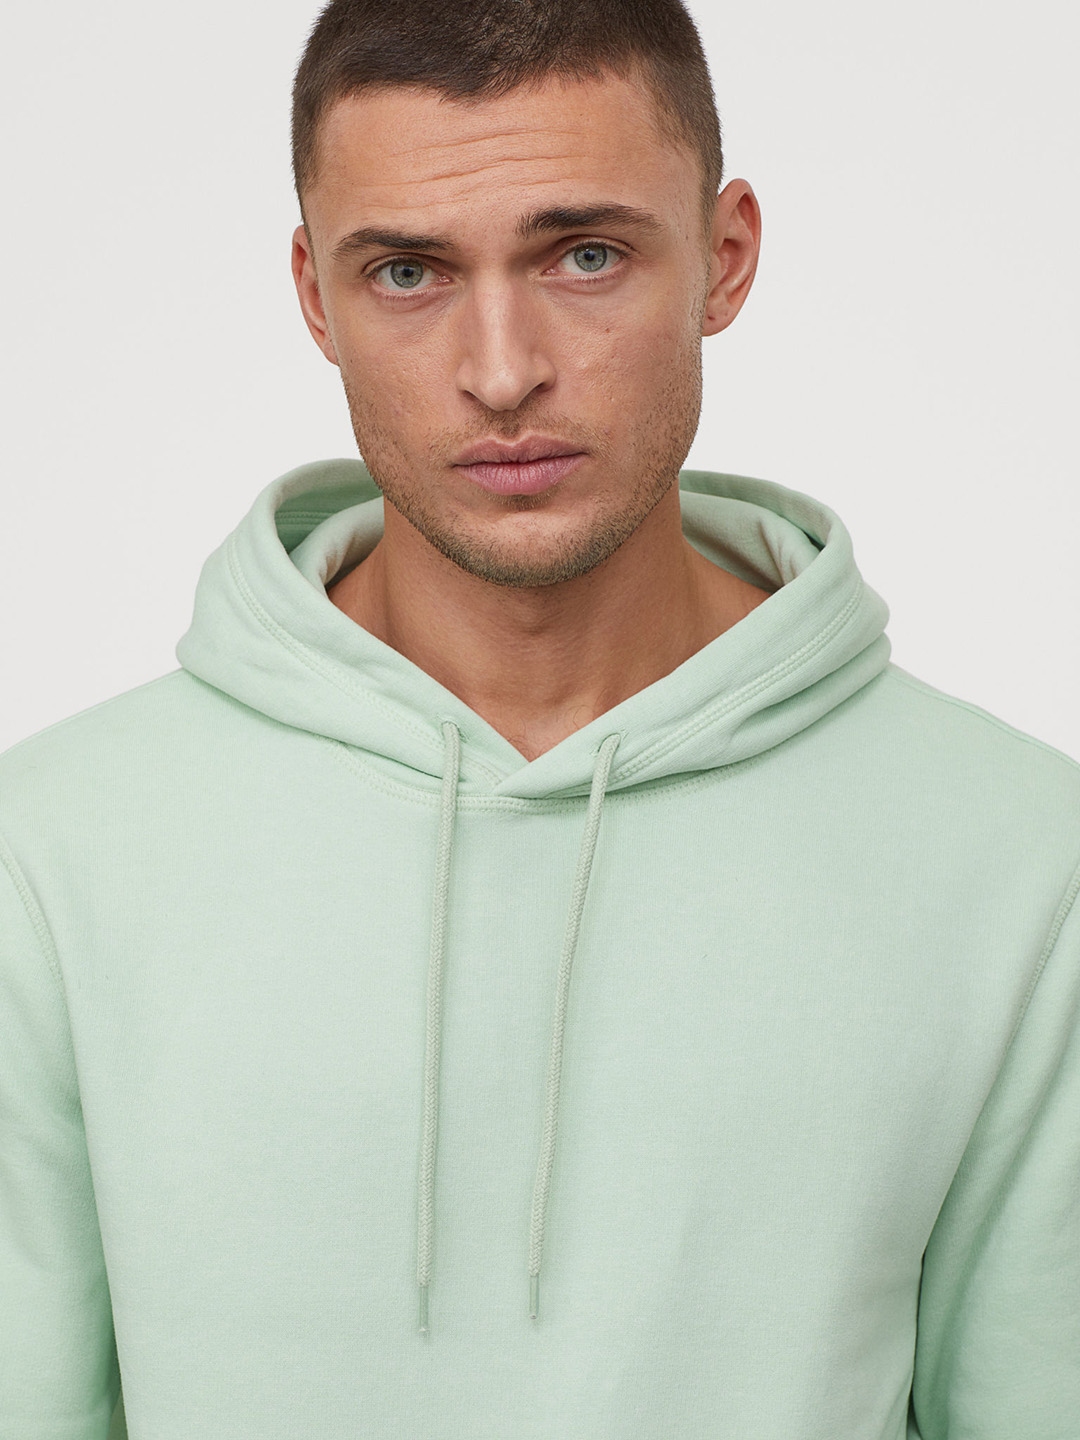 Buy H&M Men Green Solid Hooded Top - Sweatshirts for Men 11407918 | Myntra